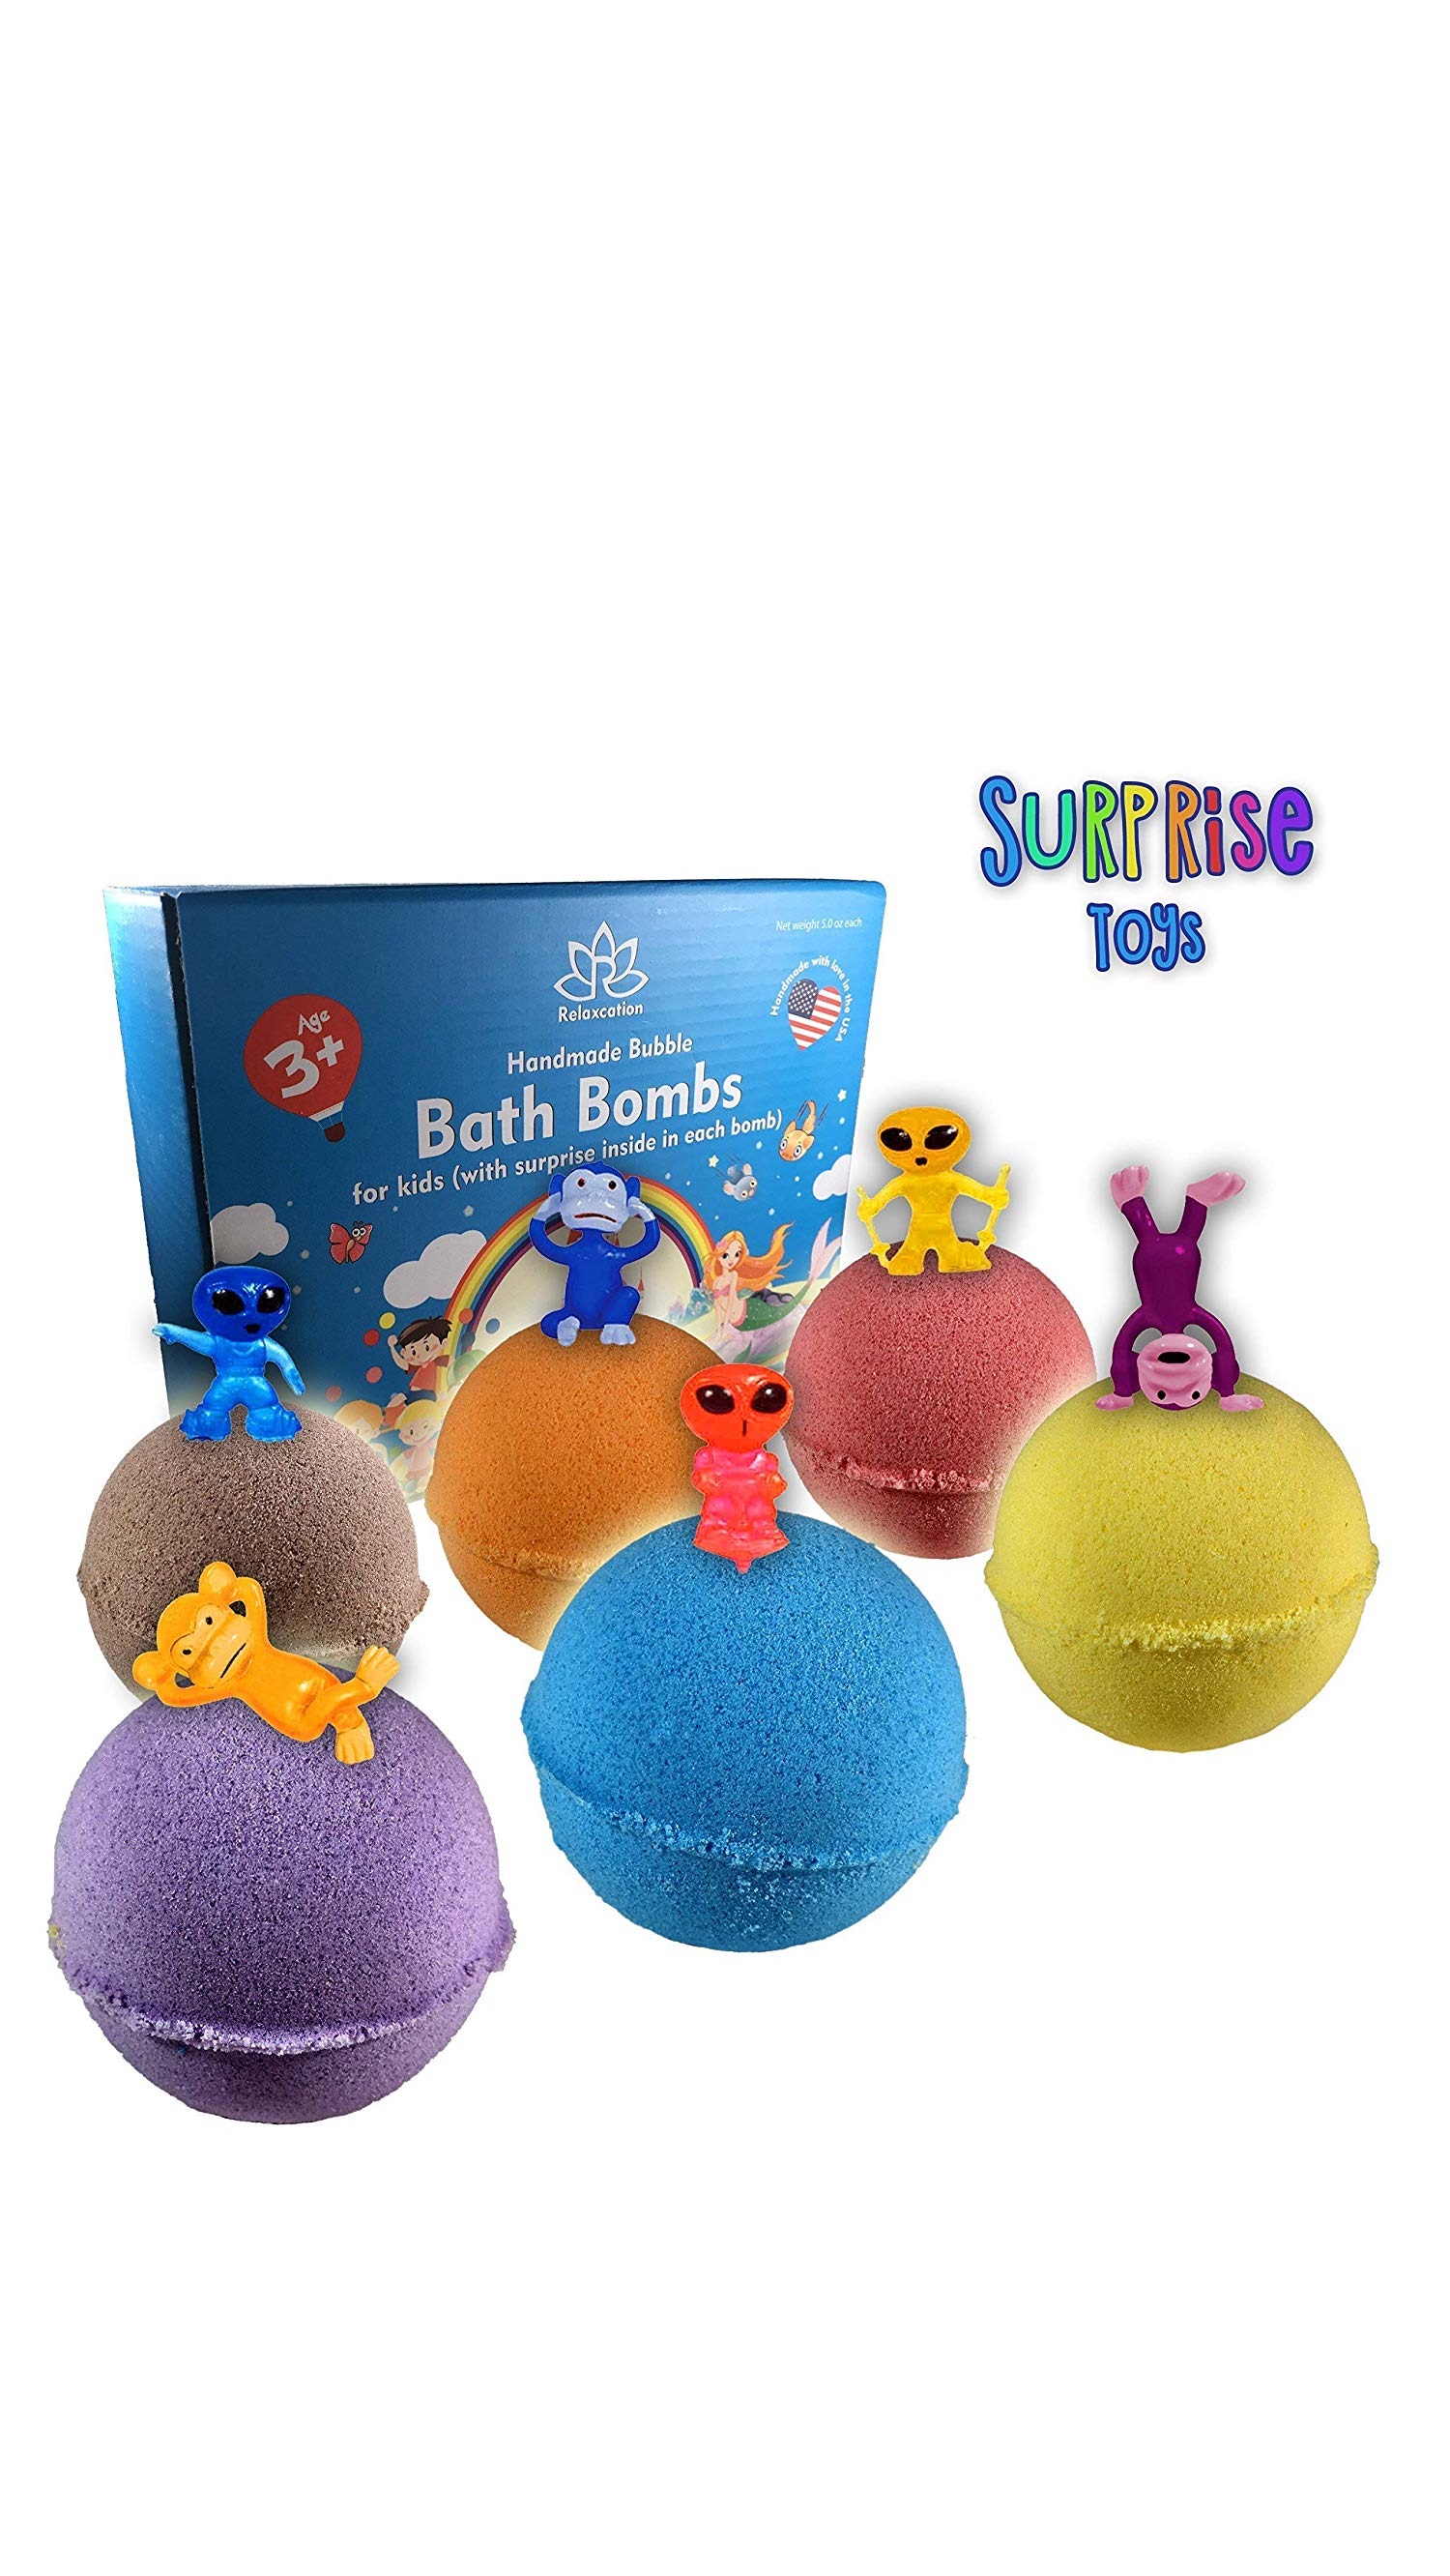 diy bath bombs for kids